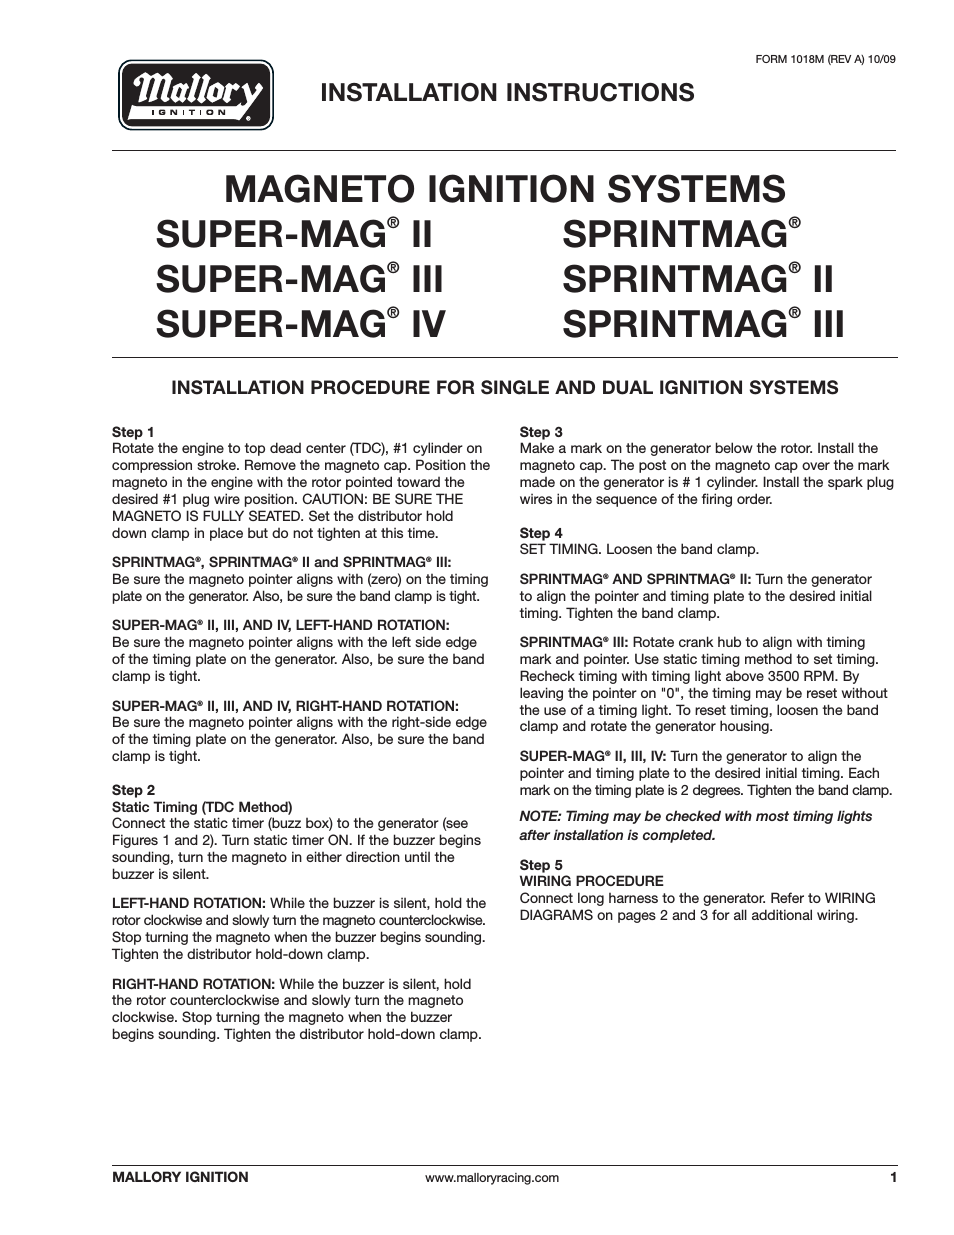 Mallory MAGNETO IGNITION SYSTEMS SPRINTMAG, SPRINTMAG II,III